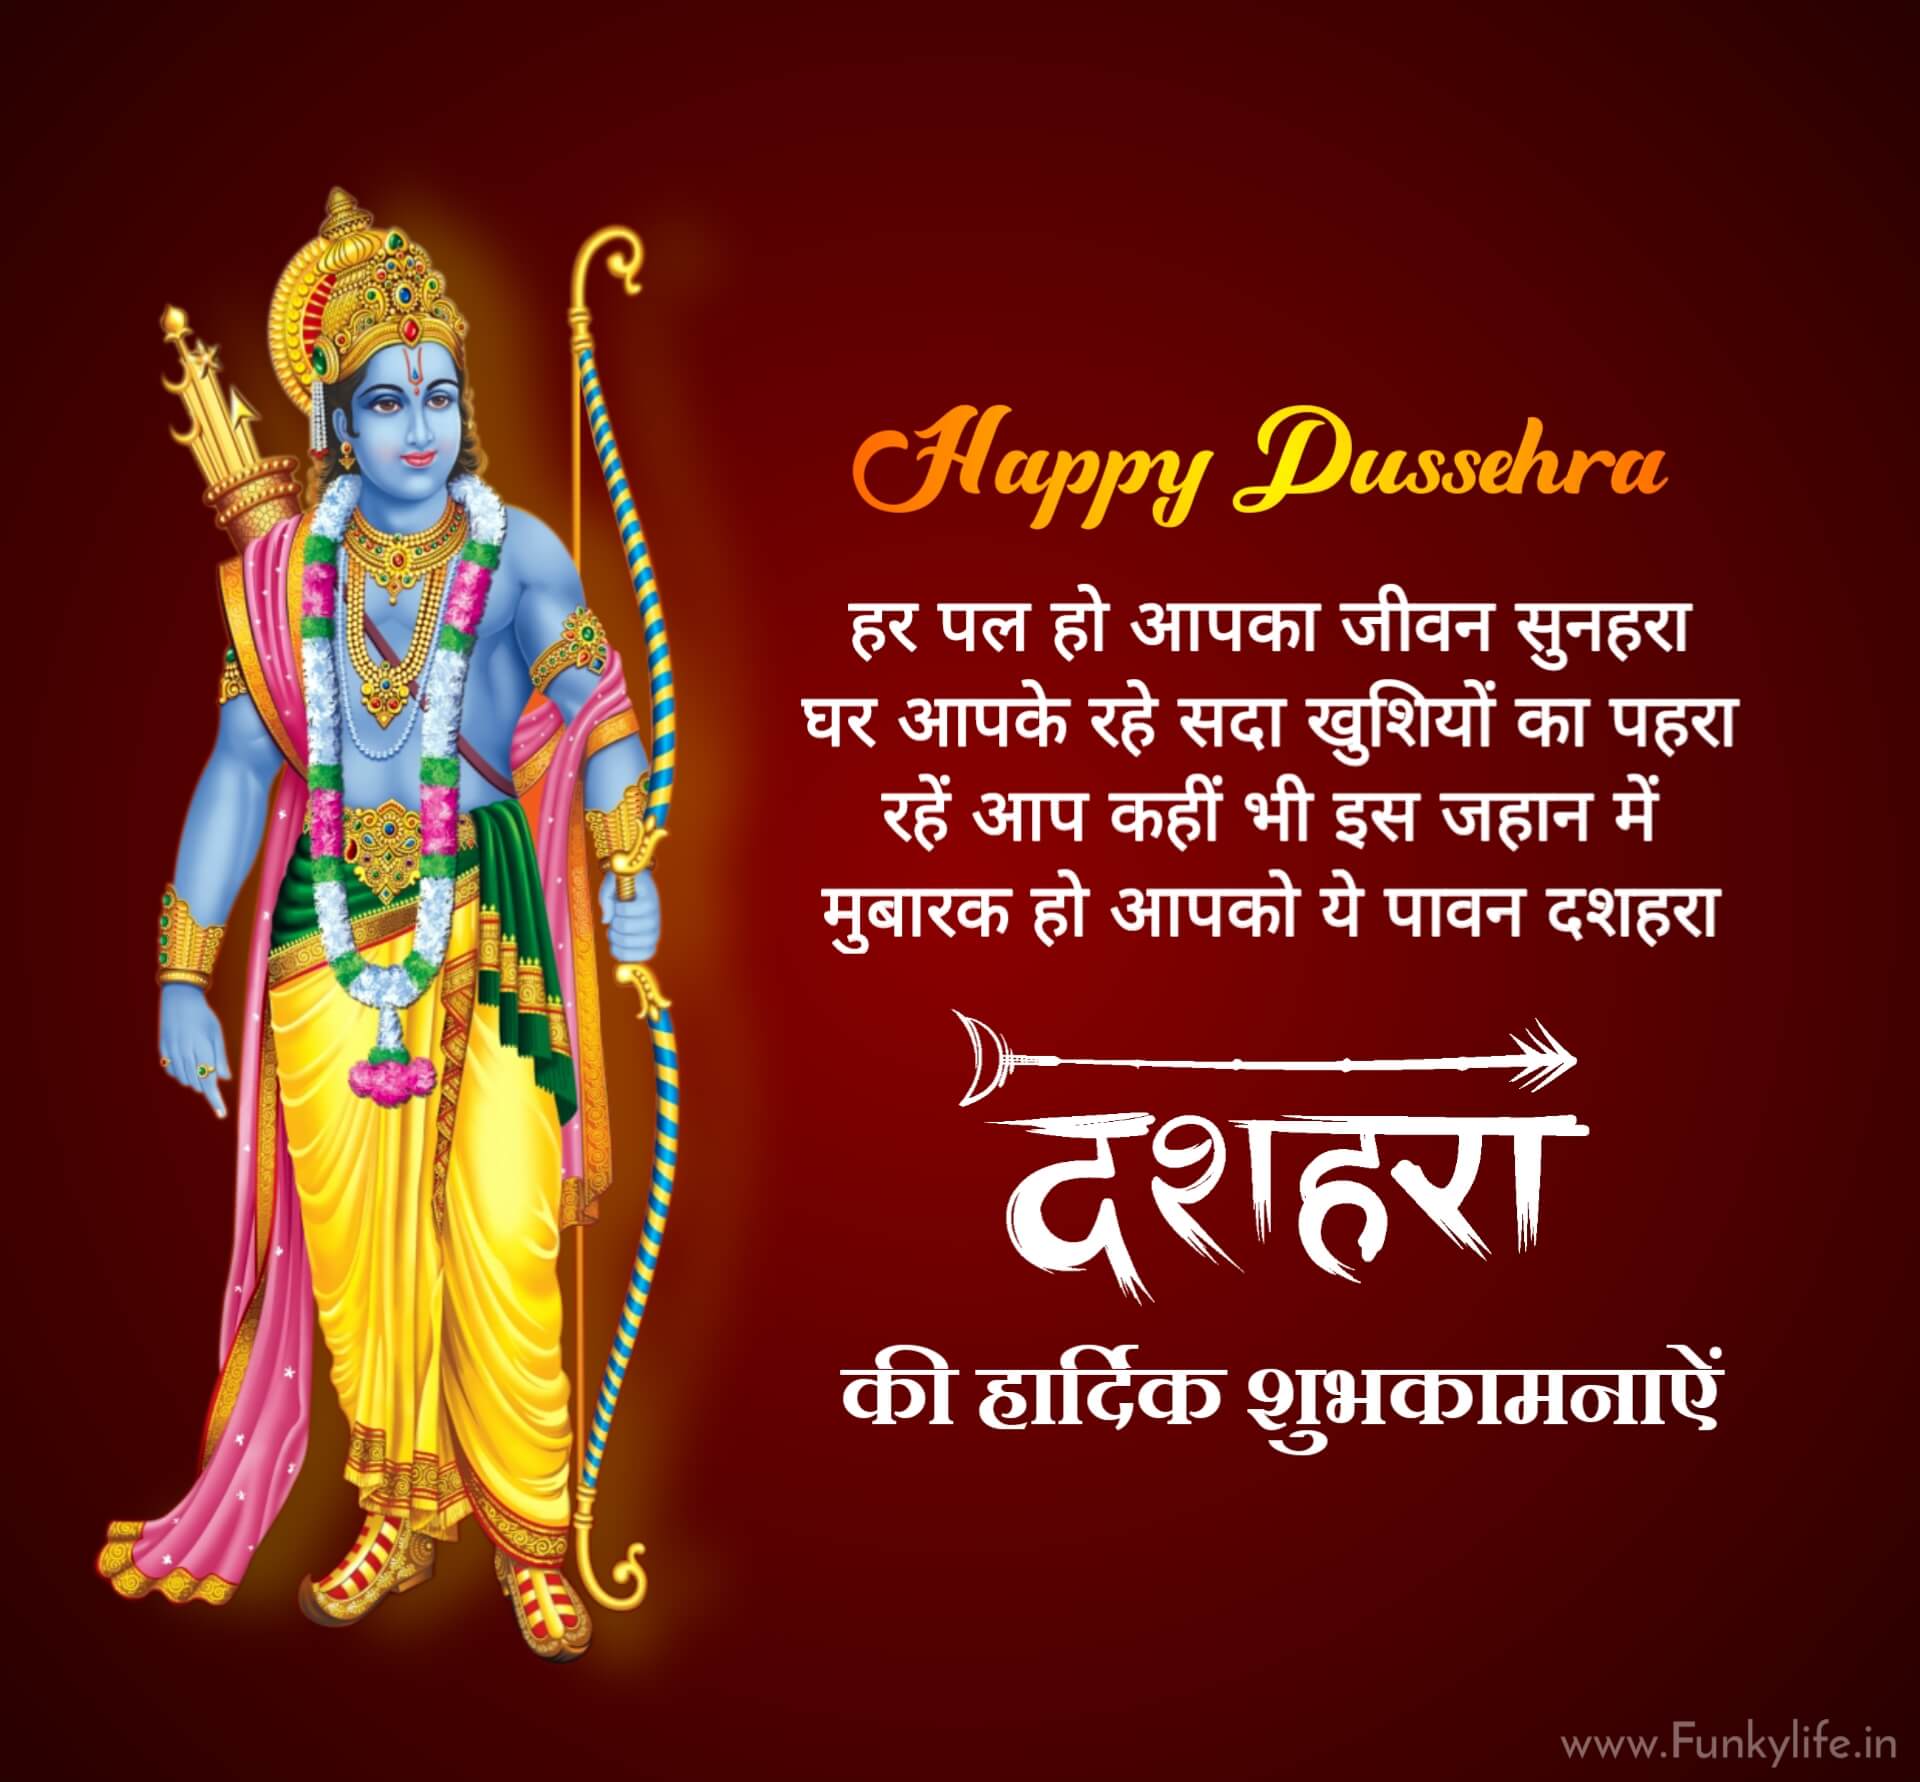 Bhagwan Ram Dussehra wishes in Hindi